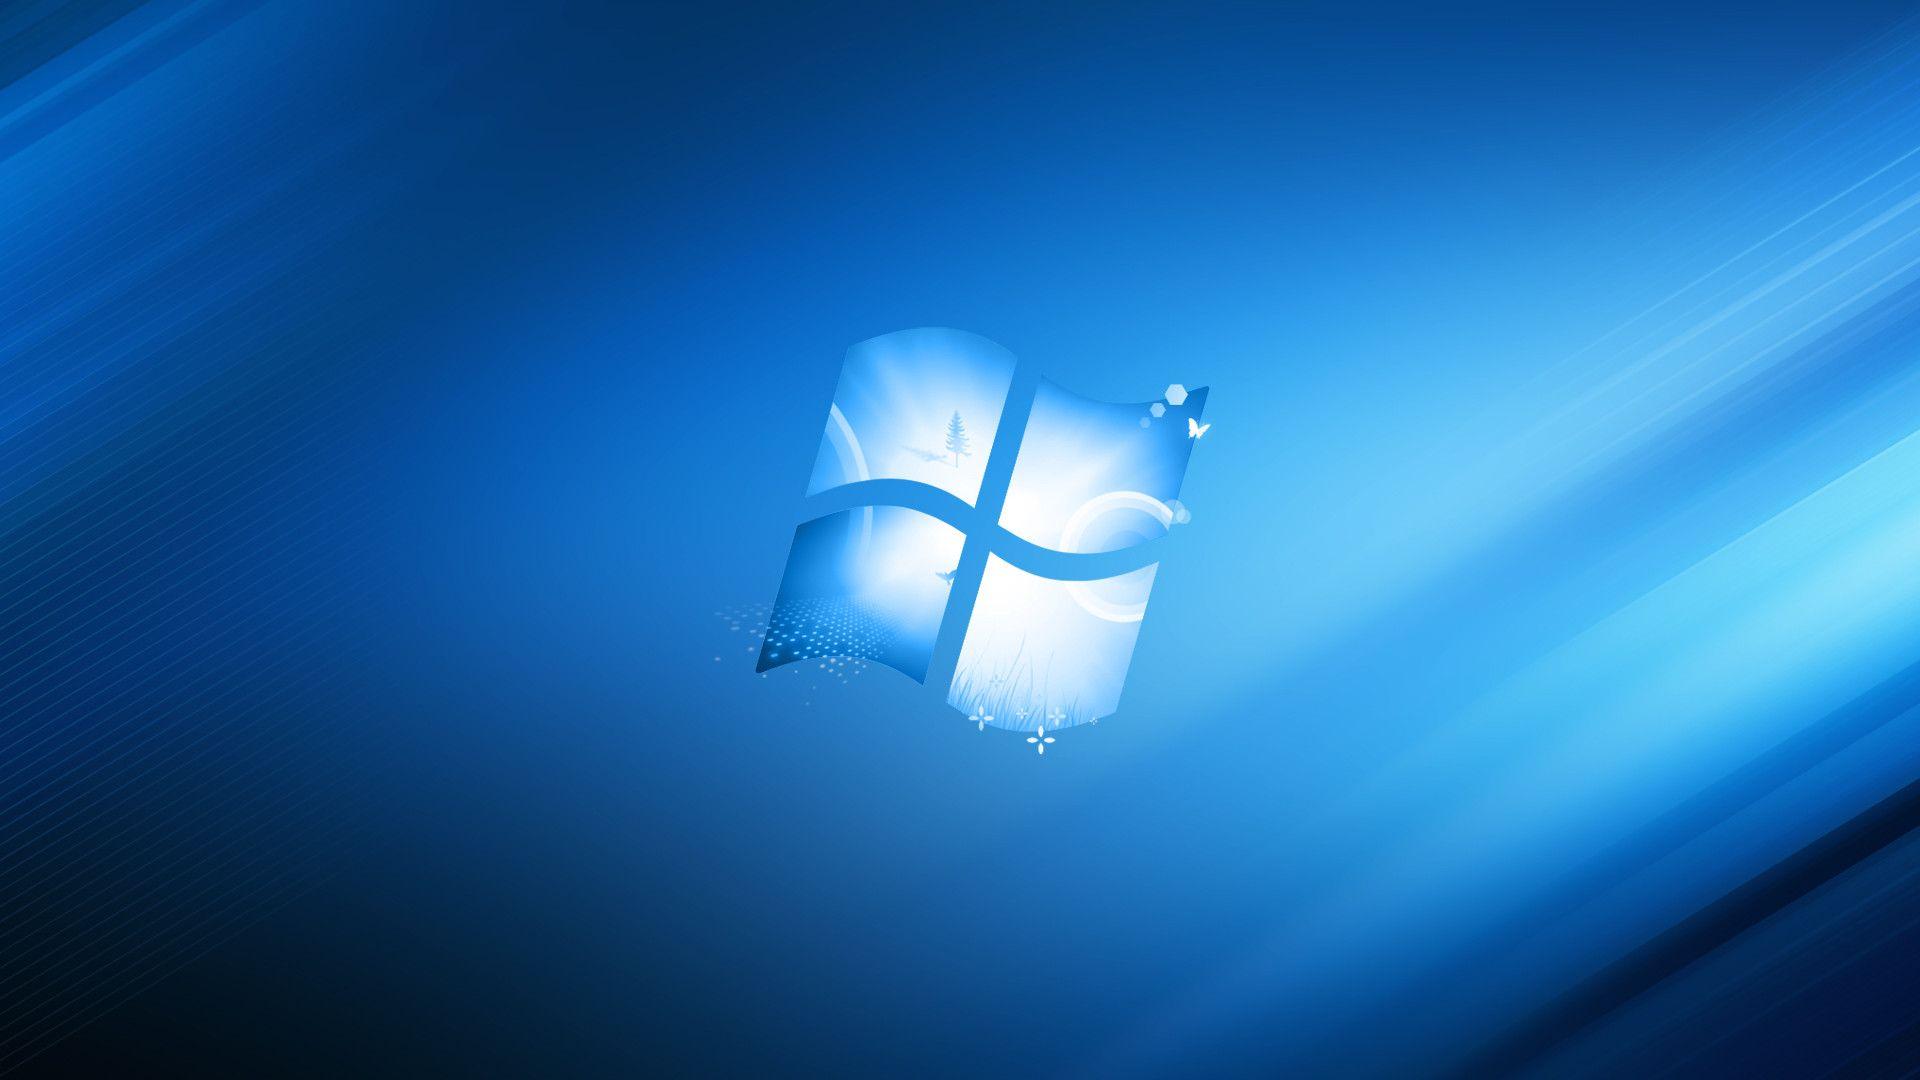 Best Windows 8 Wallpapers - Wallpaper Cave